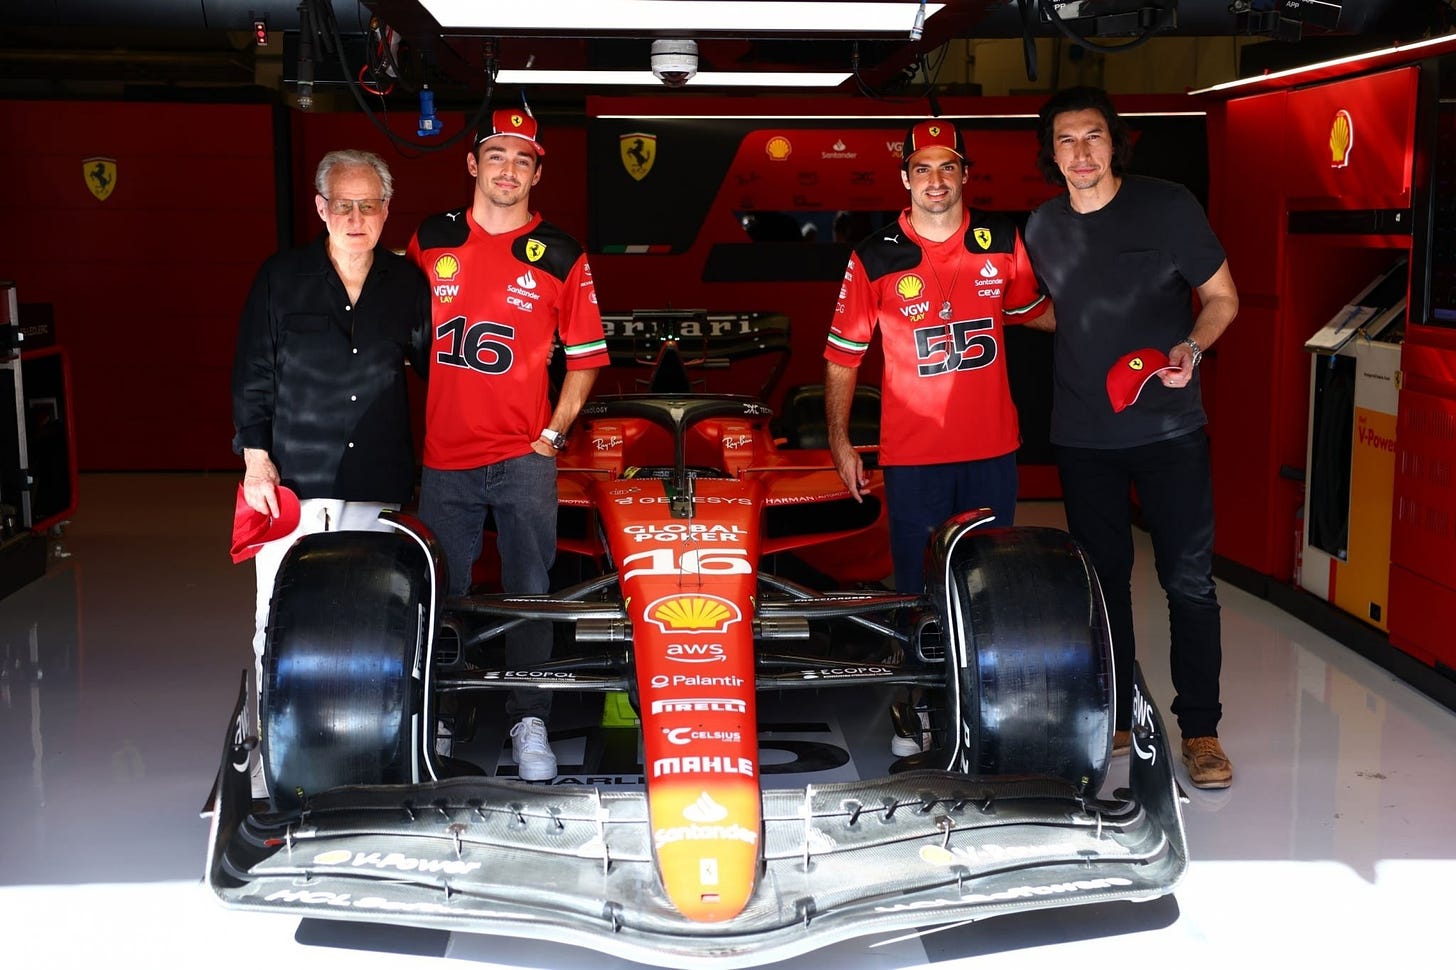 Michael Mann and Adam Driver posing with Ferrari drivers Charles Leclerc and Carlos Sainz with the Ferrari F1 car